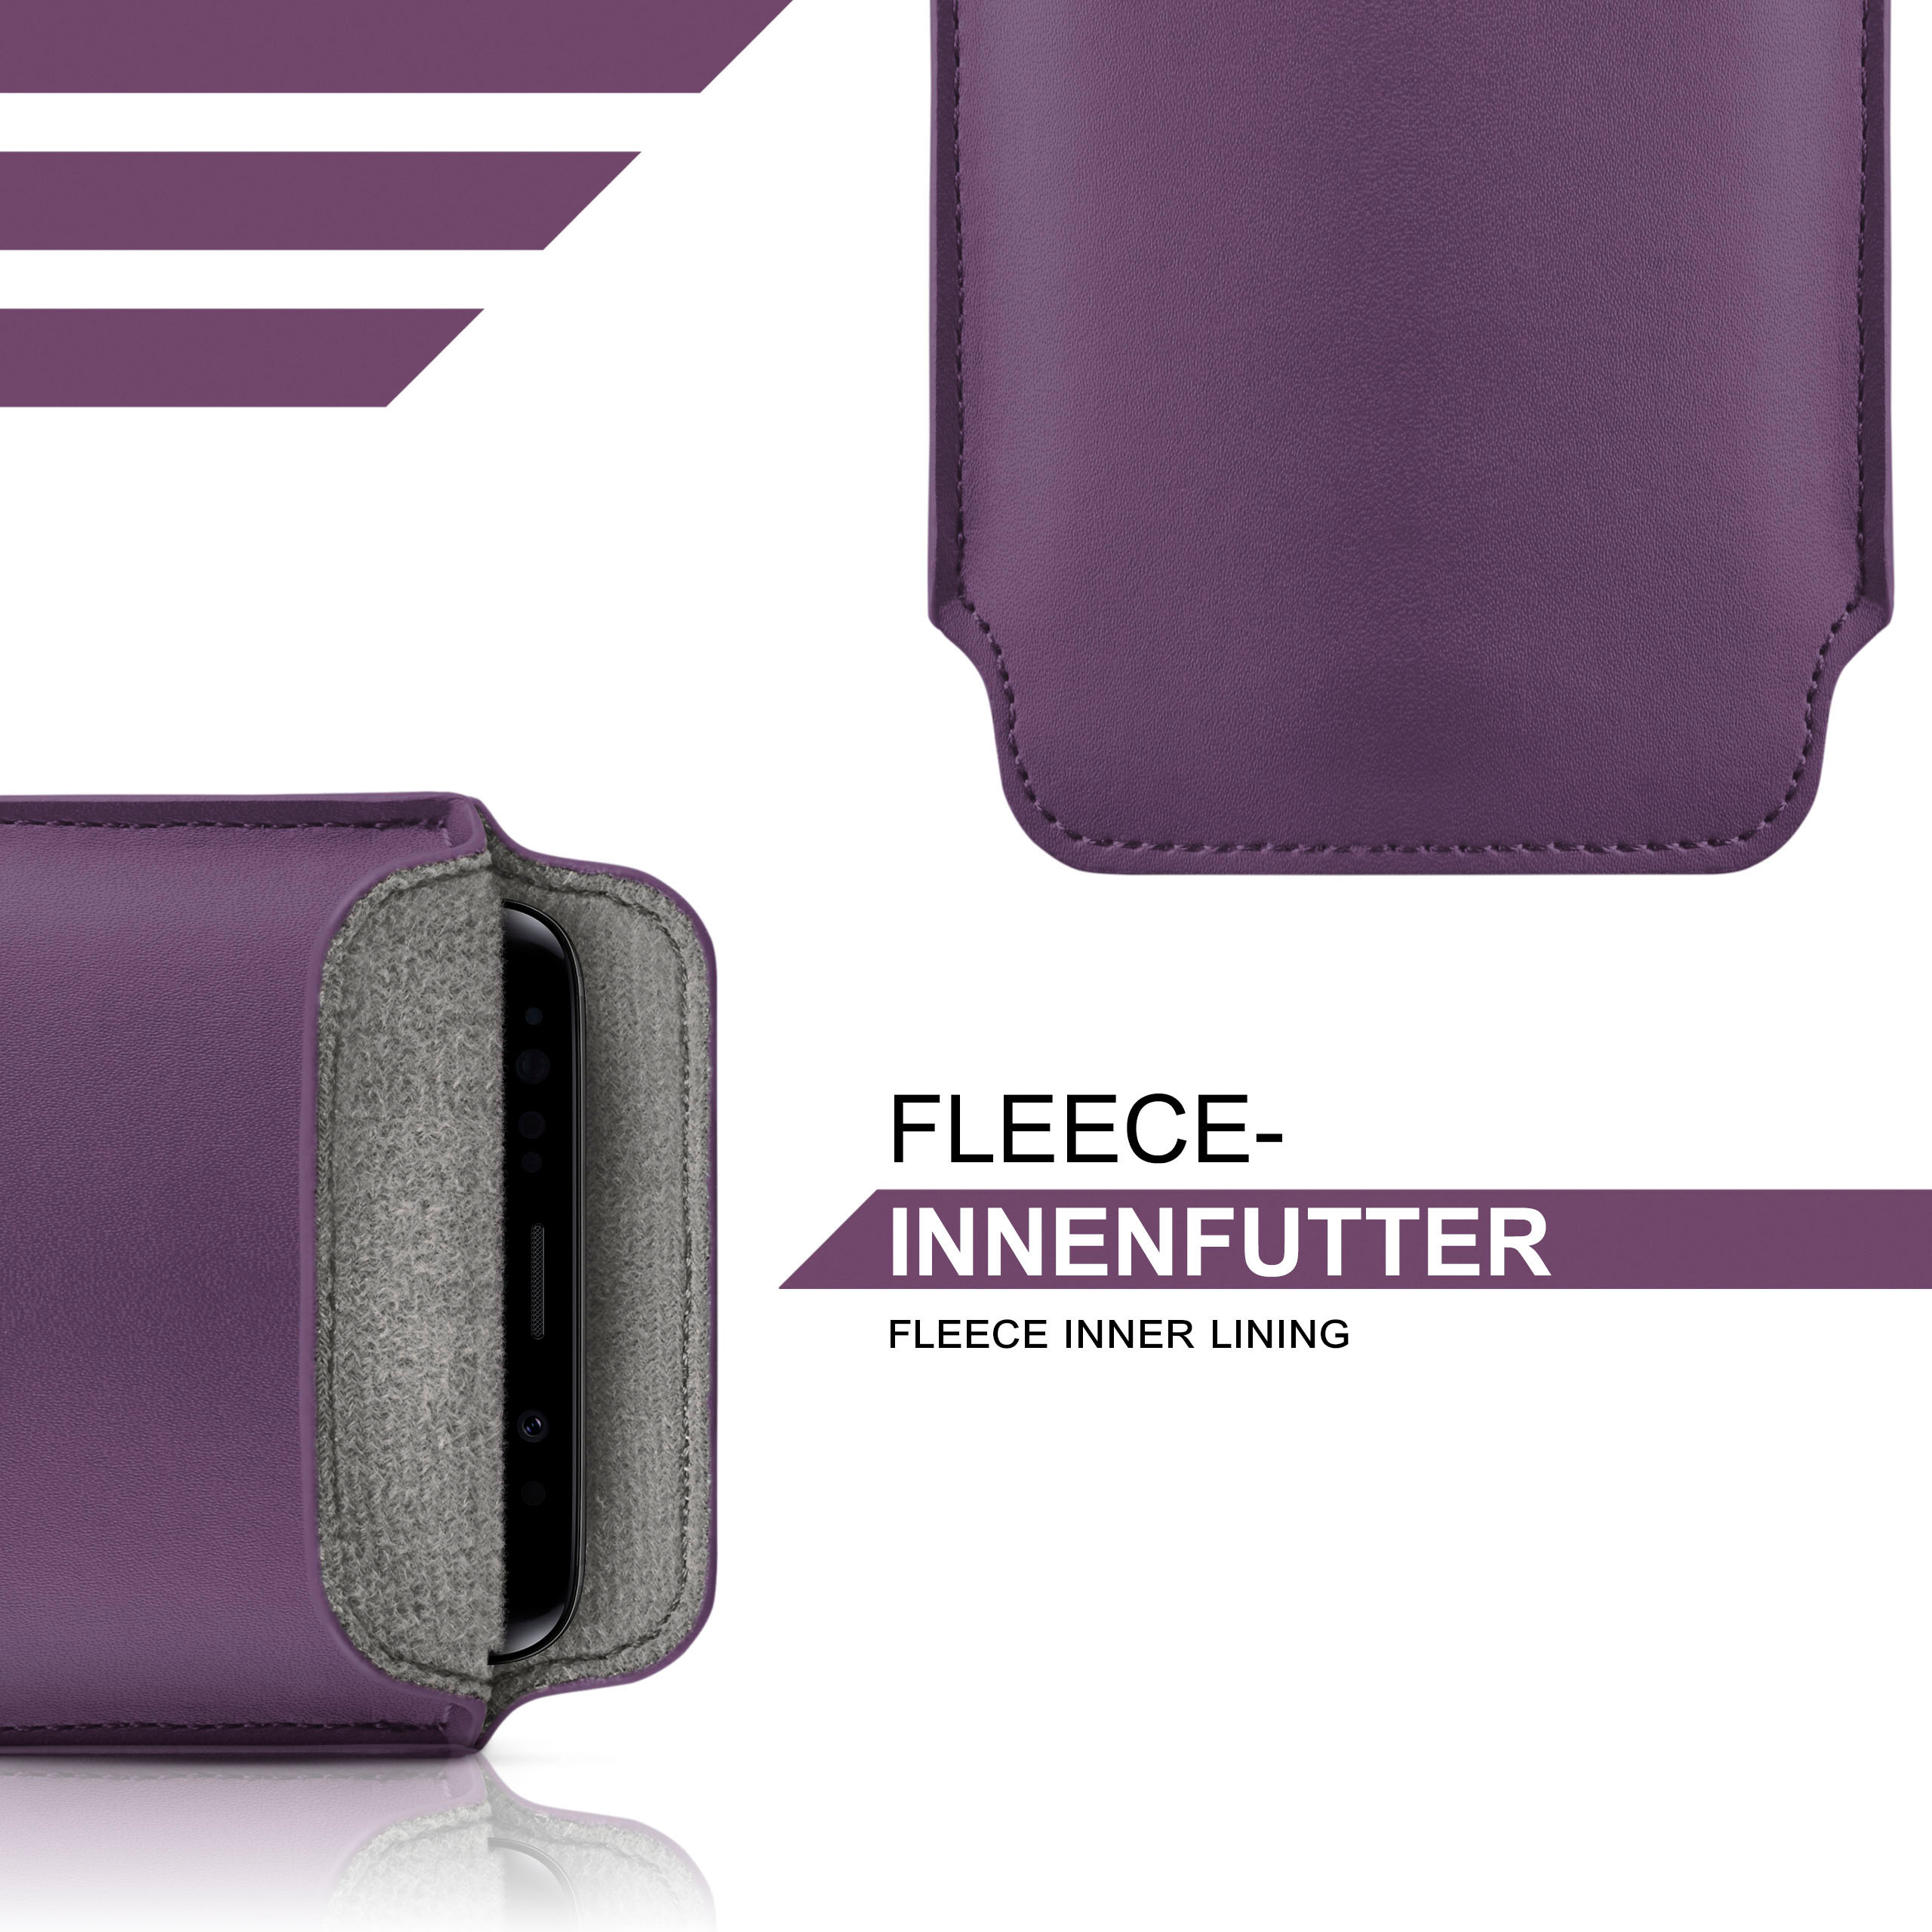 Case, Cover, Lite, MOEX Indigo-Violet Slide Huawei, P10 Full